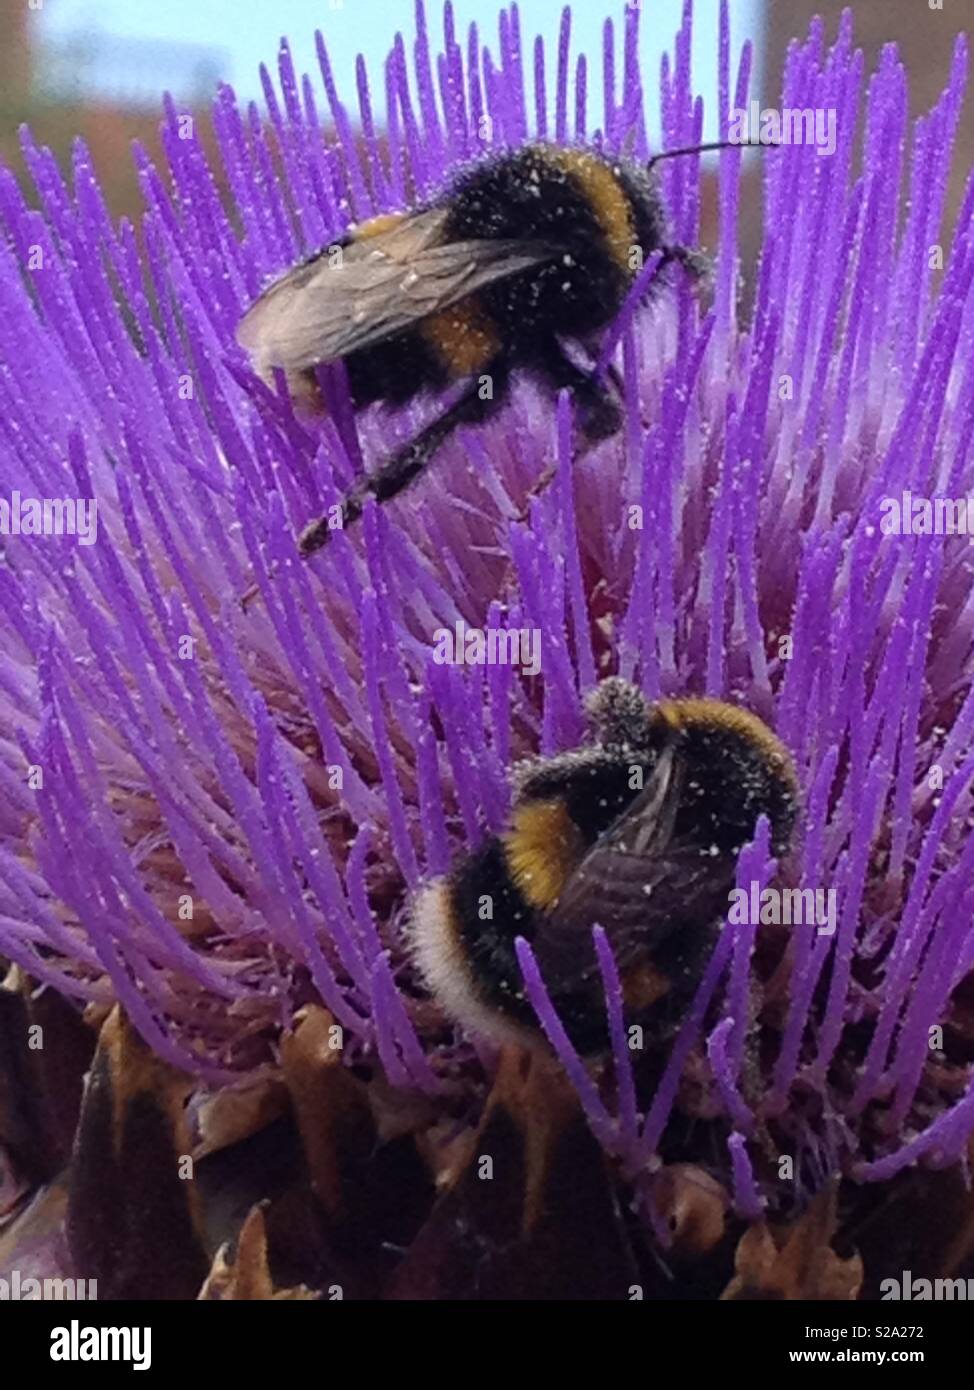 British bees pollinating purple flower gardening summertime Stock Photo